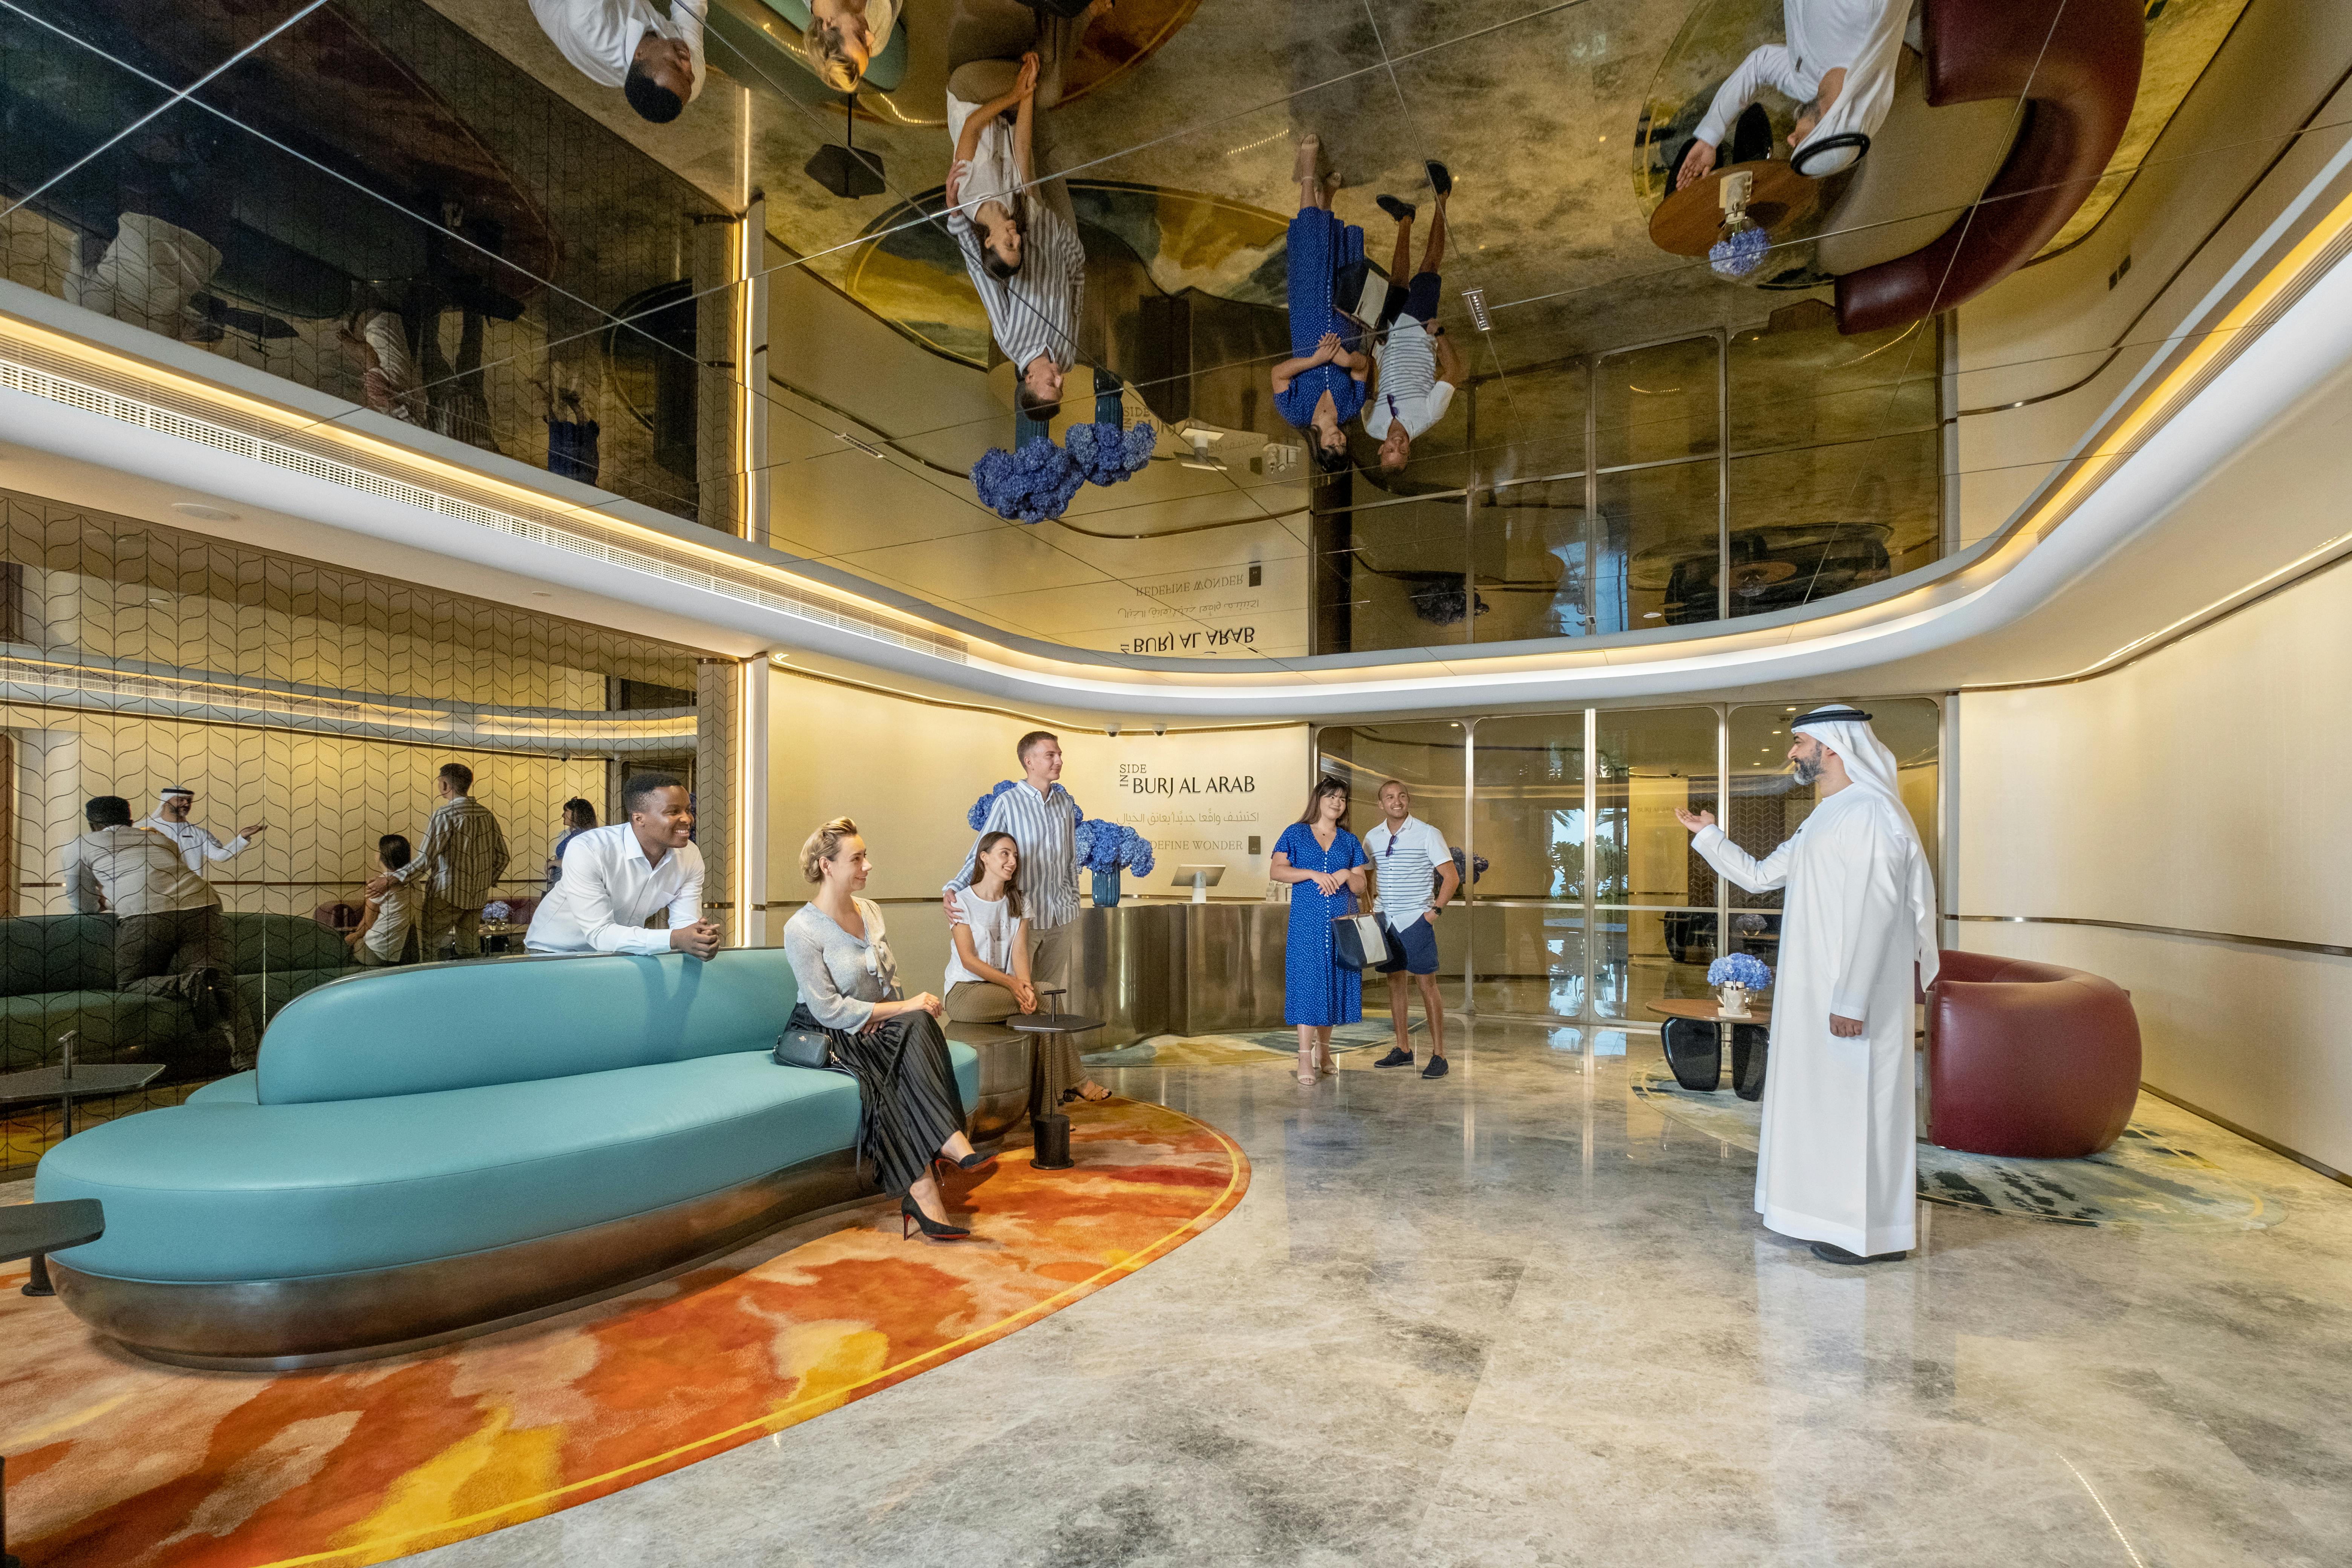 Tour of traditional Dubai and Burj Al Arab Musement